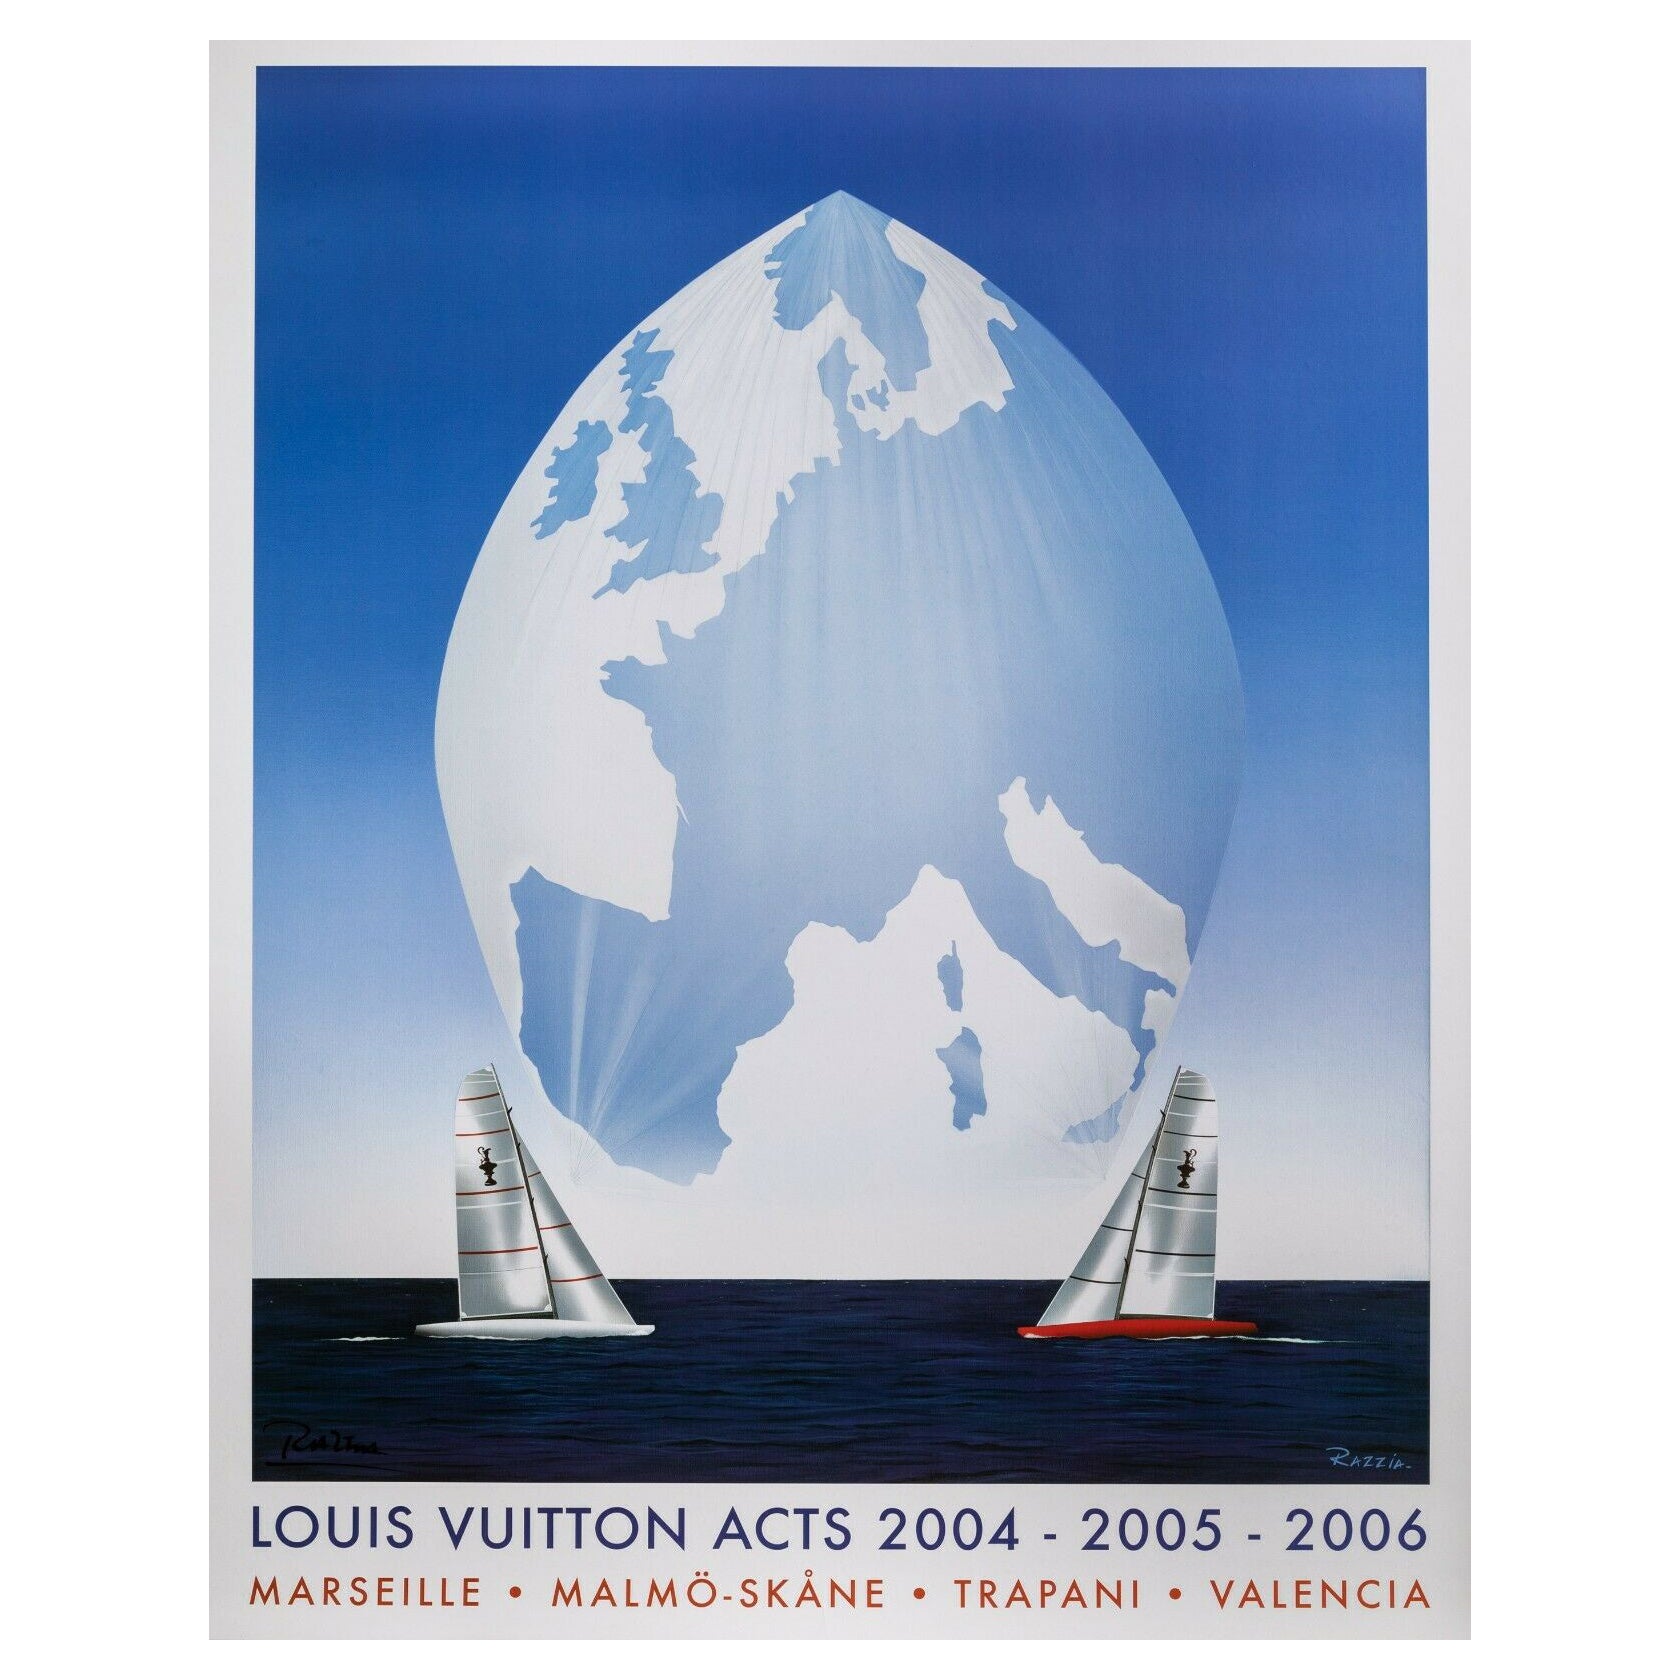 2002 Louis Vuitton Cup 2002 Auckland - Razzia Original Vintage Poster For  Sale at 1stDibs